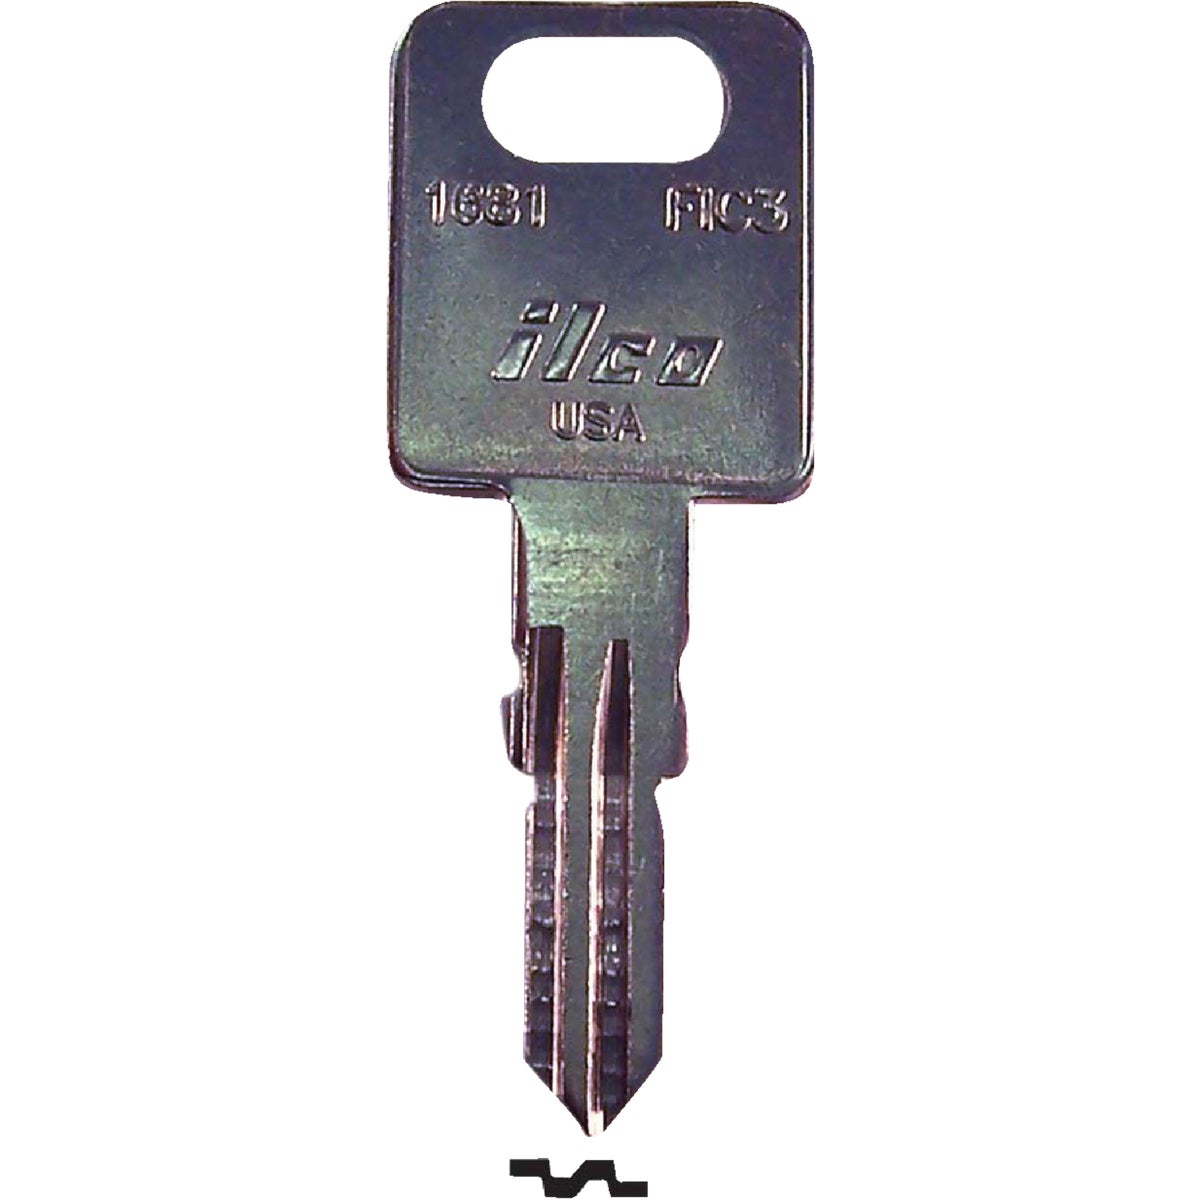 ILCO FIC Nickel Plated RV Key, 1681 (10-Pack)